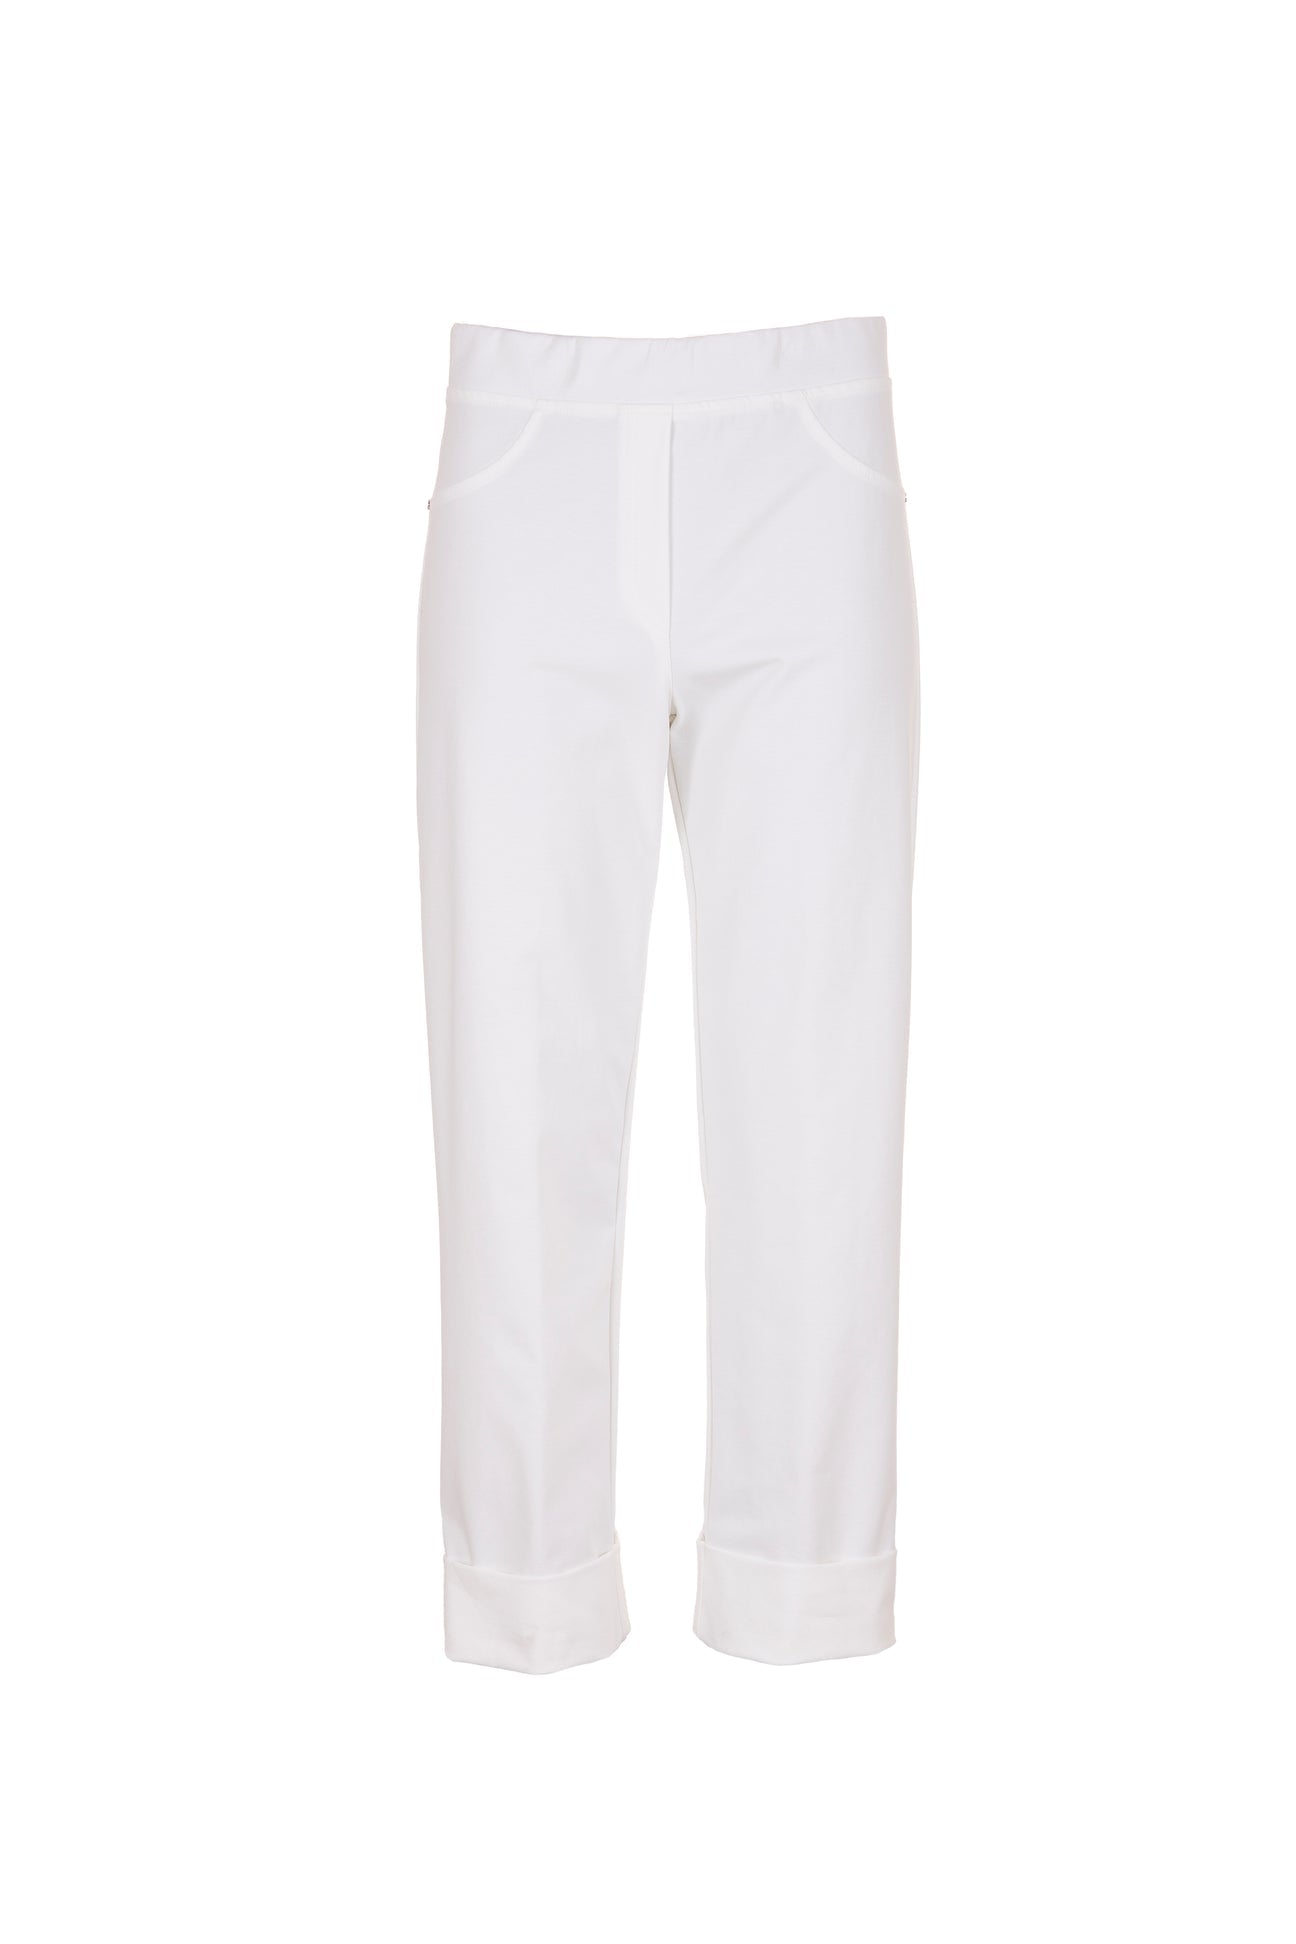 Peruzzi White turn up trouser S24200